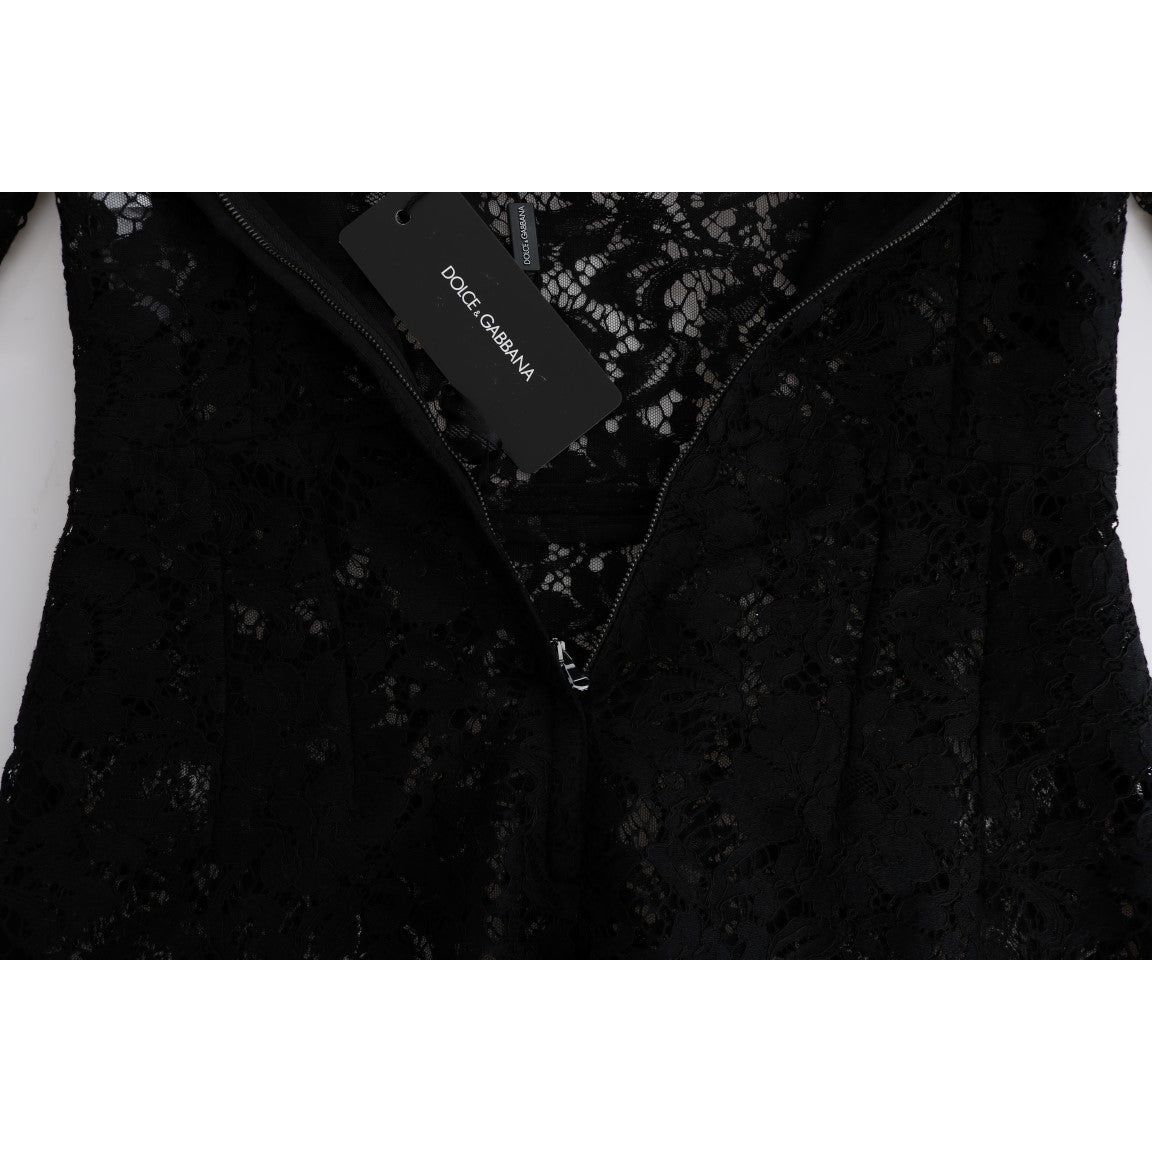 Dolce & Gabbana Black Floral Lace Chamomile Embroidered Dress black-floral-lace-chamomile-sicily-dress 450625-black-floral-lace-chamomile-sicily-dress-3.jpg